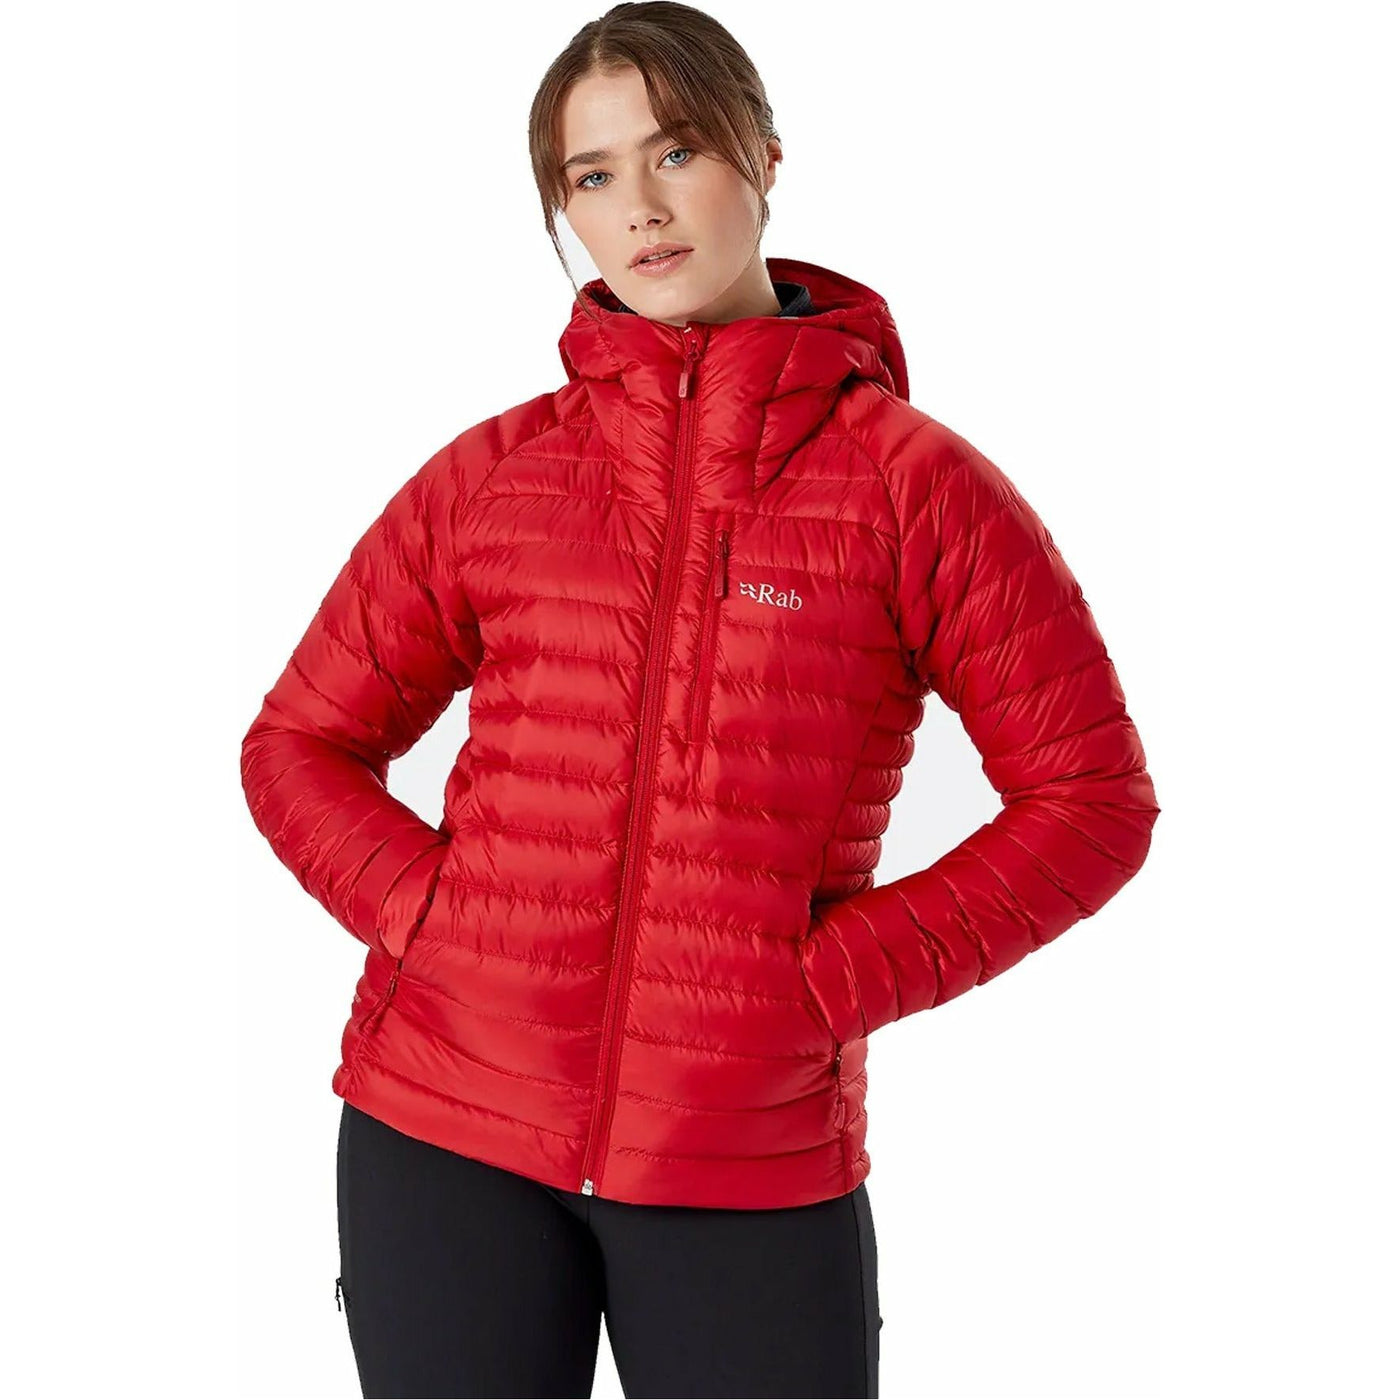 Womens Rab Microlight Alpine Jacket